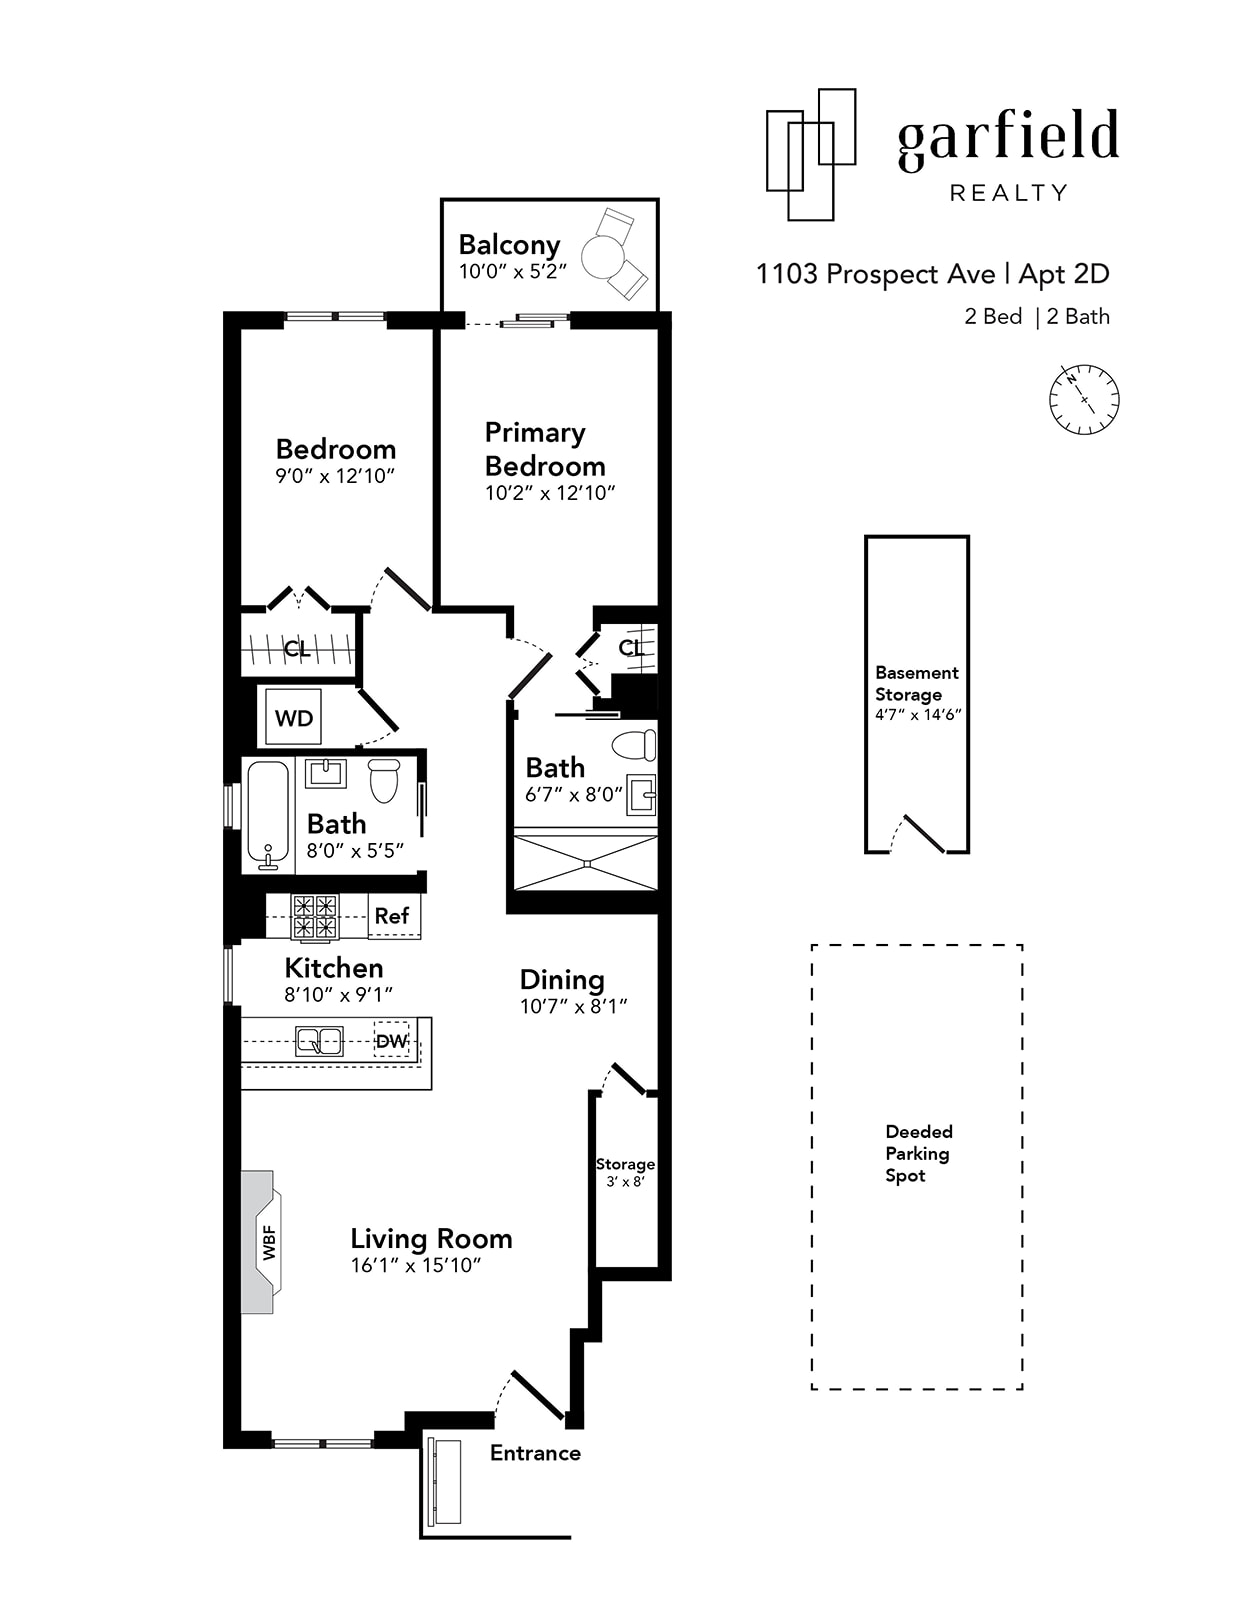 Floorplan of 1103 Prospect Ave